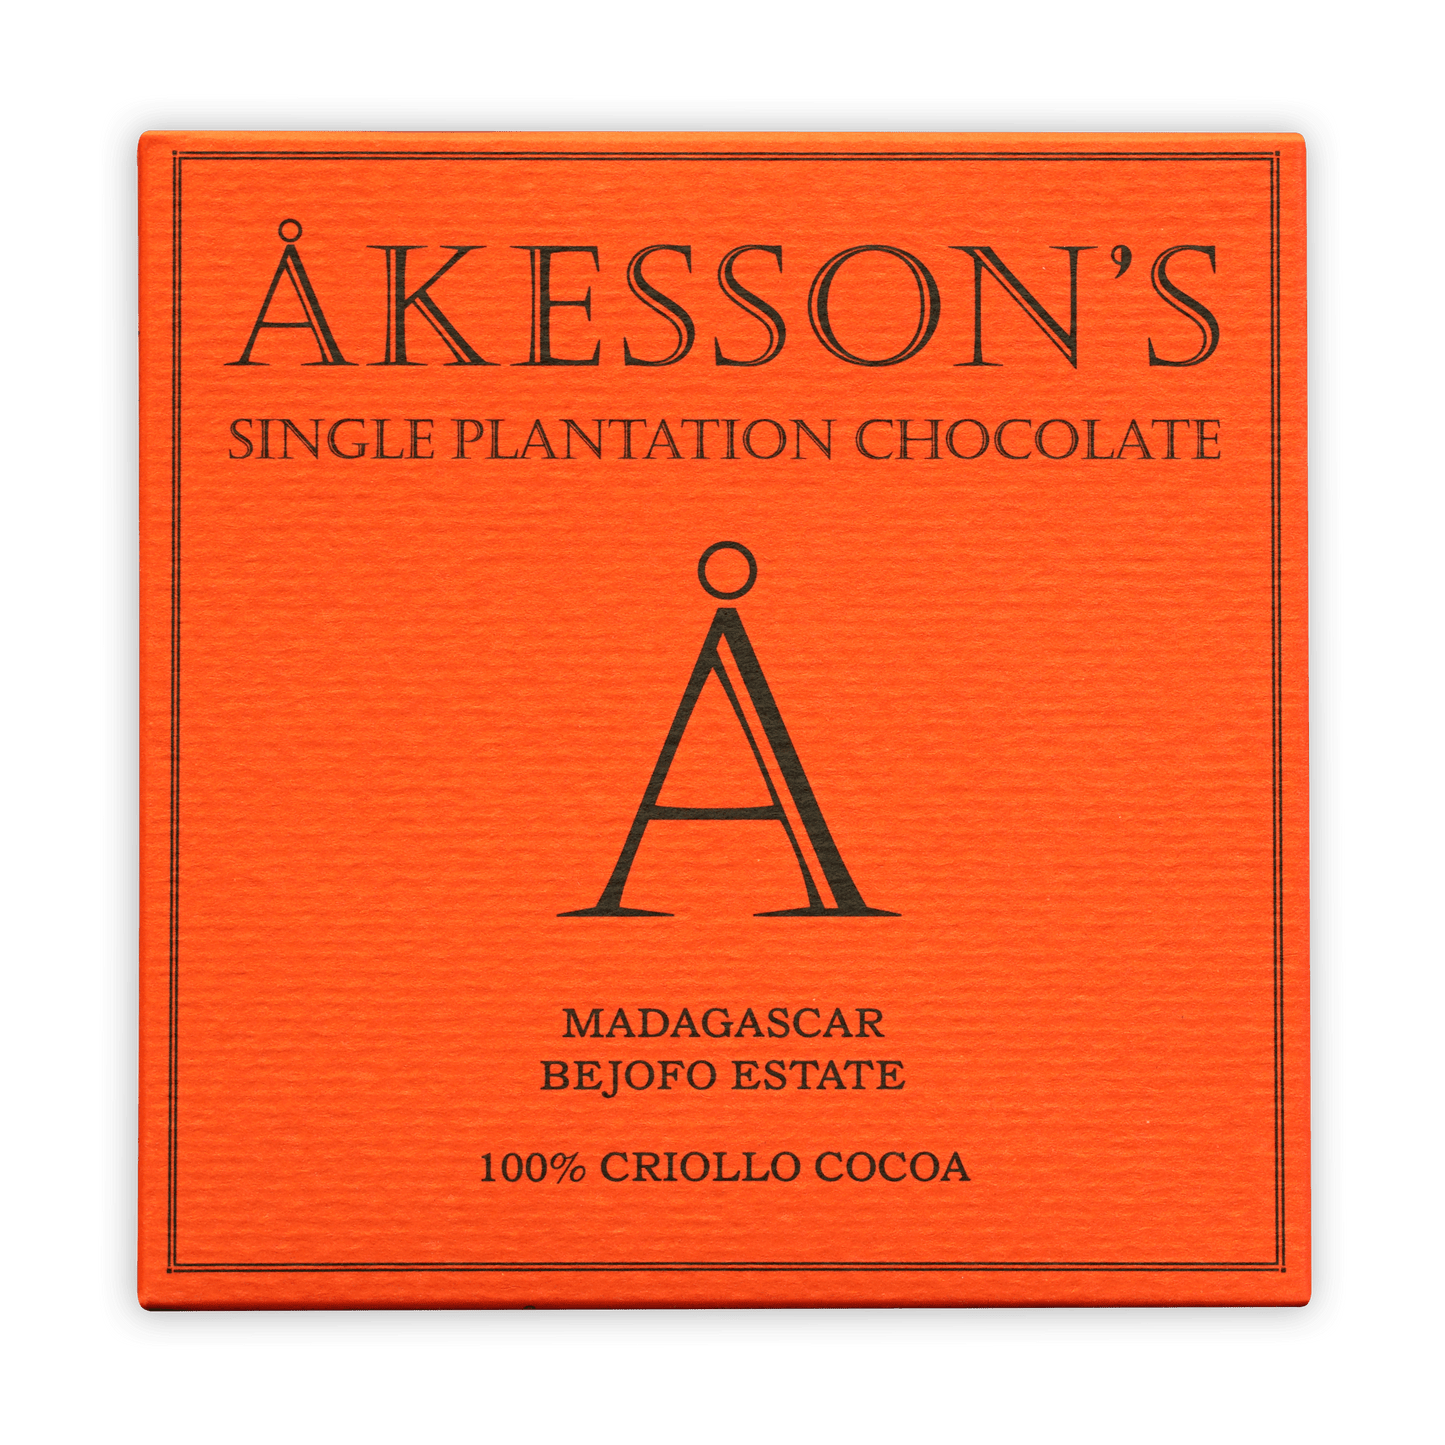 Akesson's Madagascar Criollo 100% Dark Chocolate